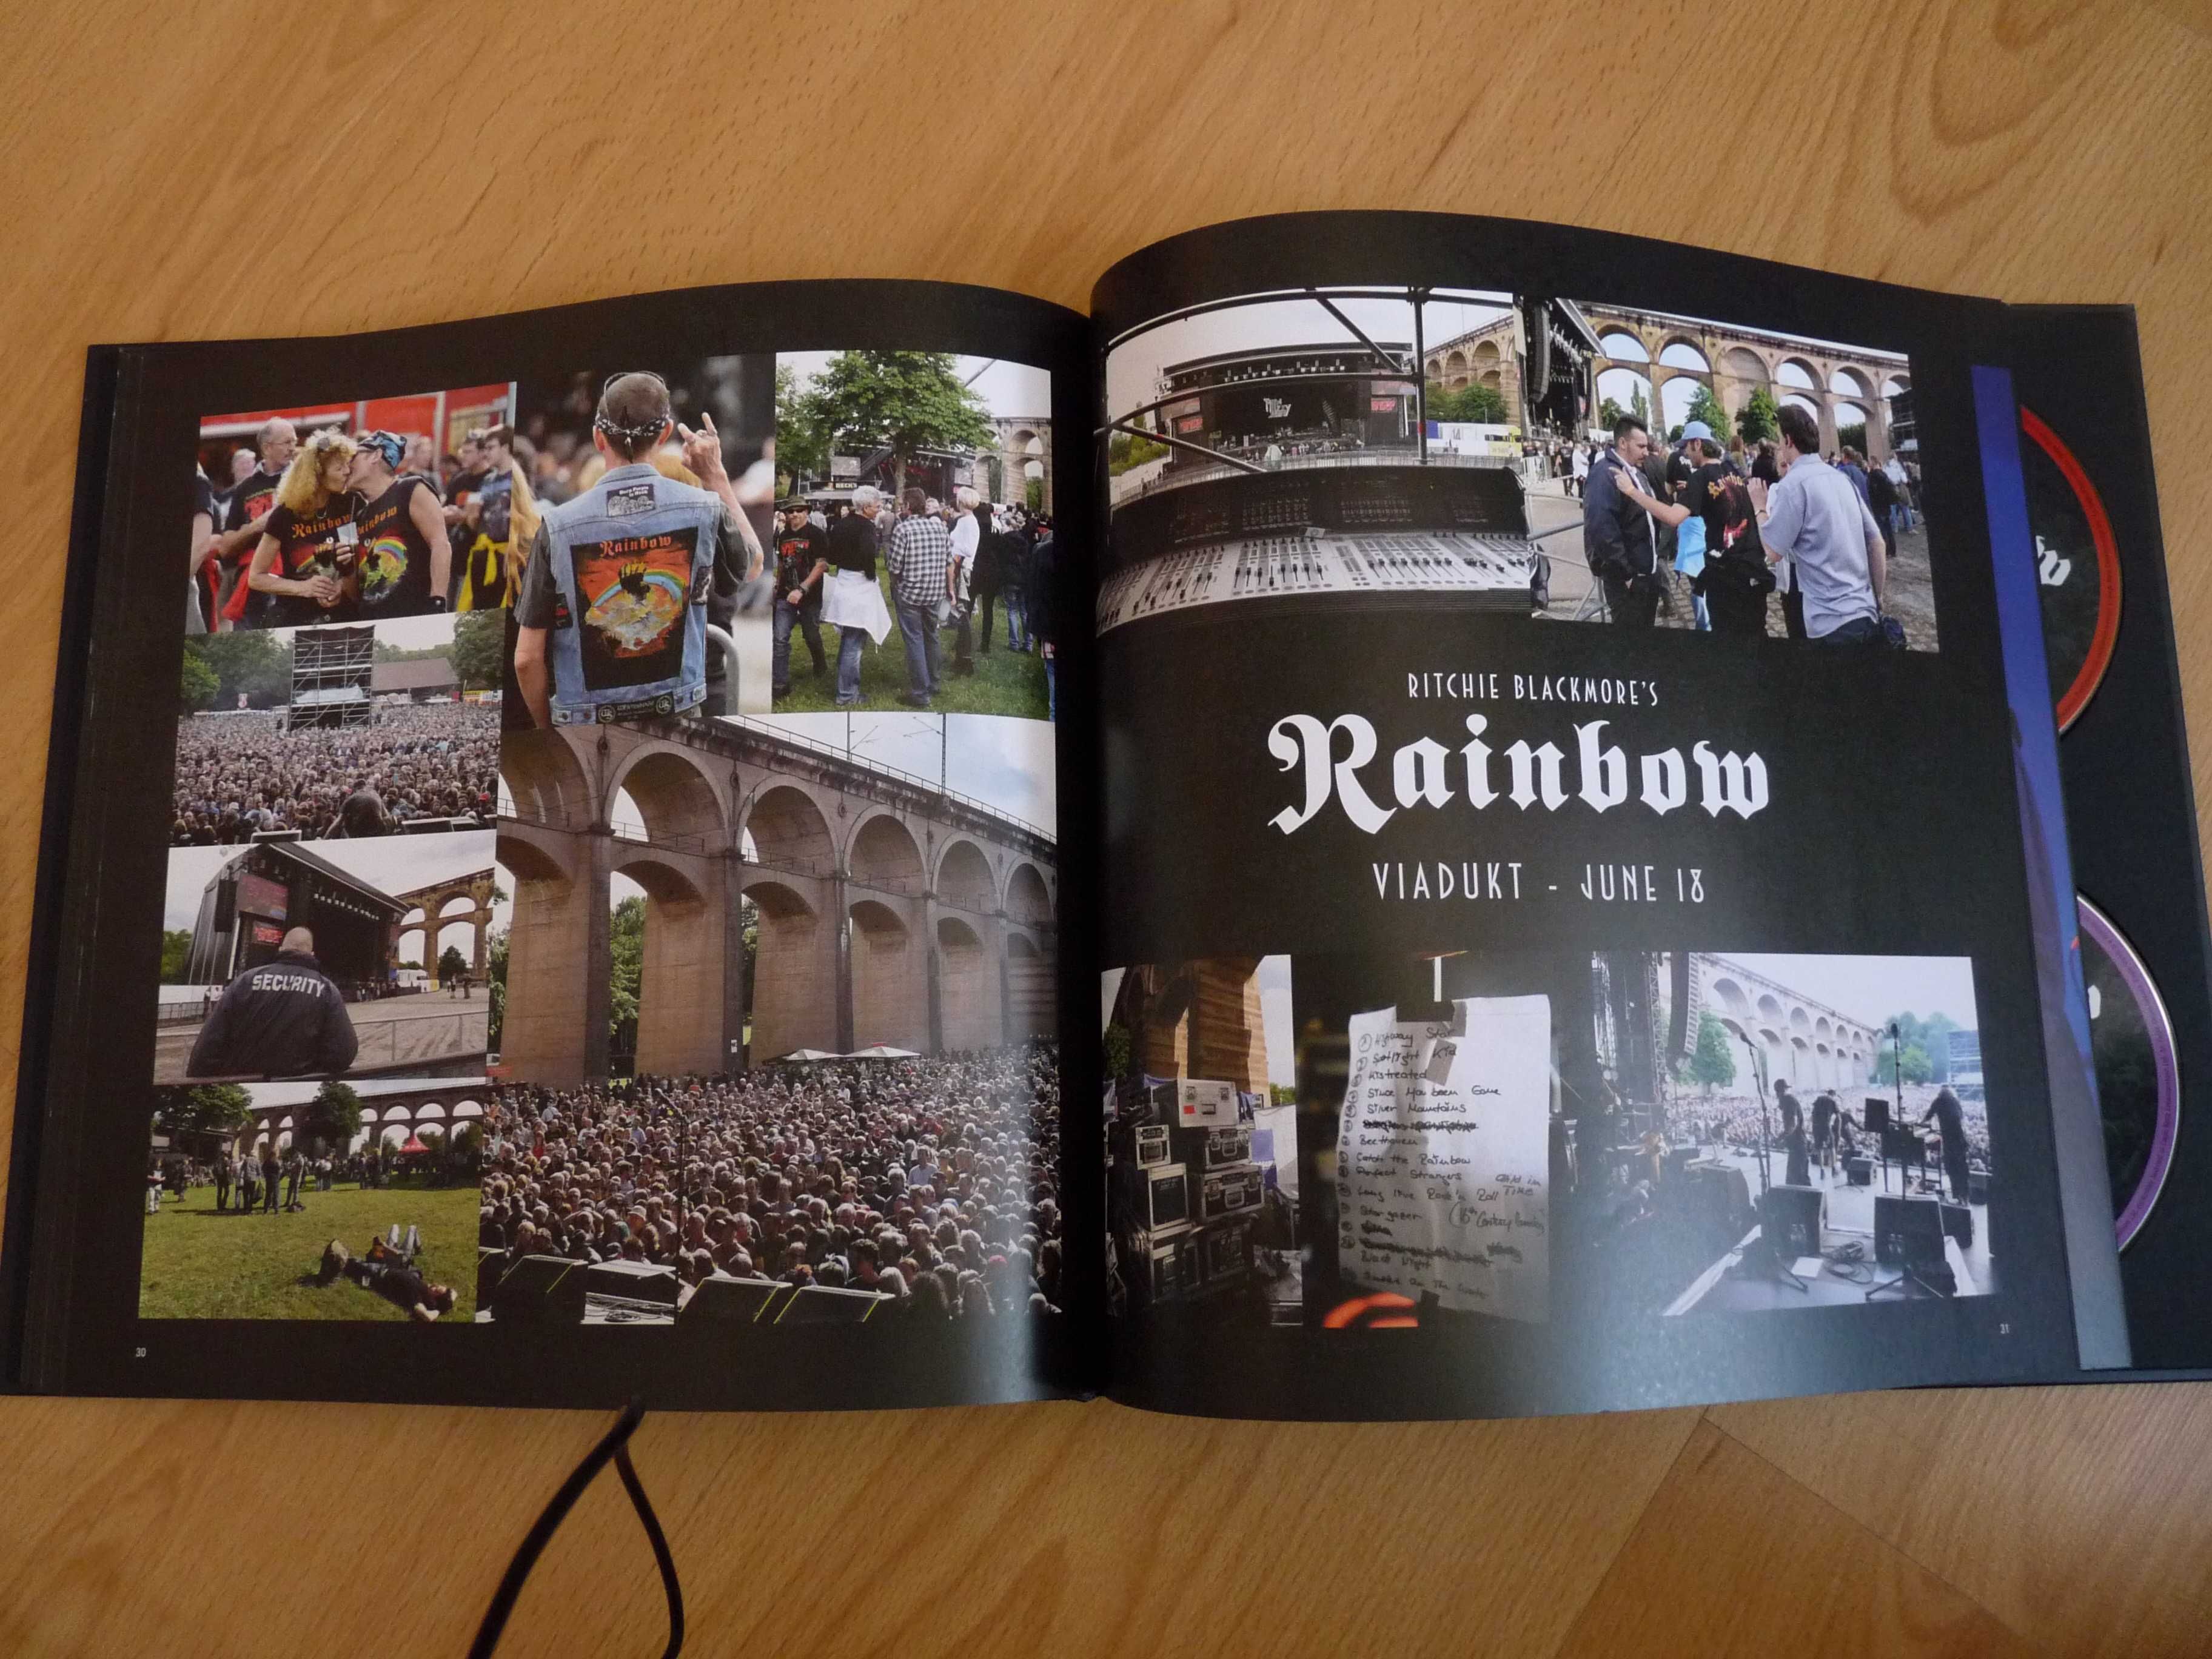 Rainbow  Blakmores  Live In Germany DVD 2CD+BLU-RAY   STAN SUPER ALBUM